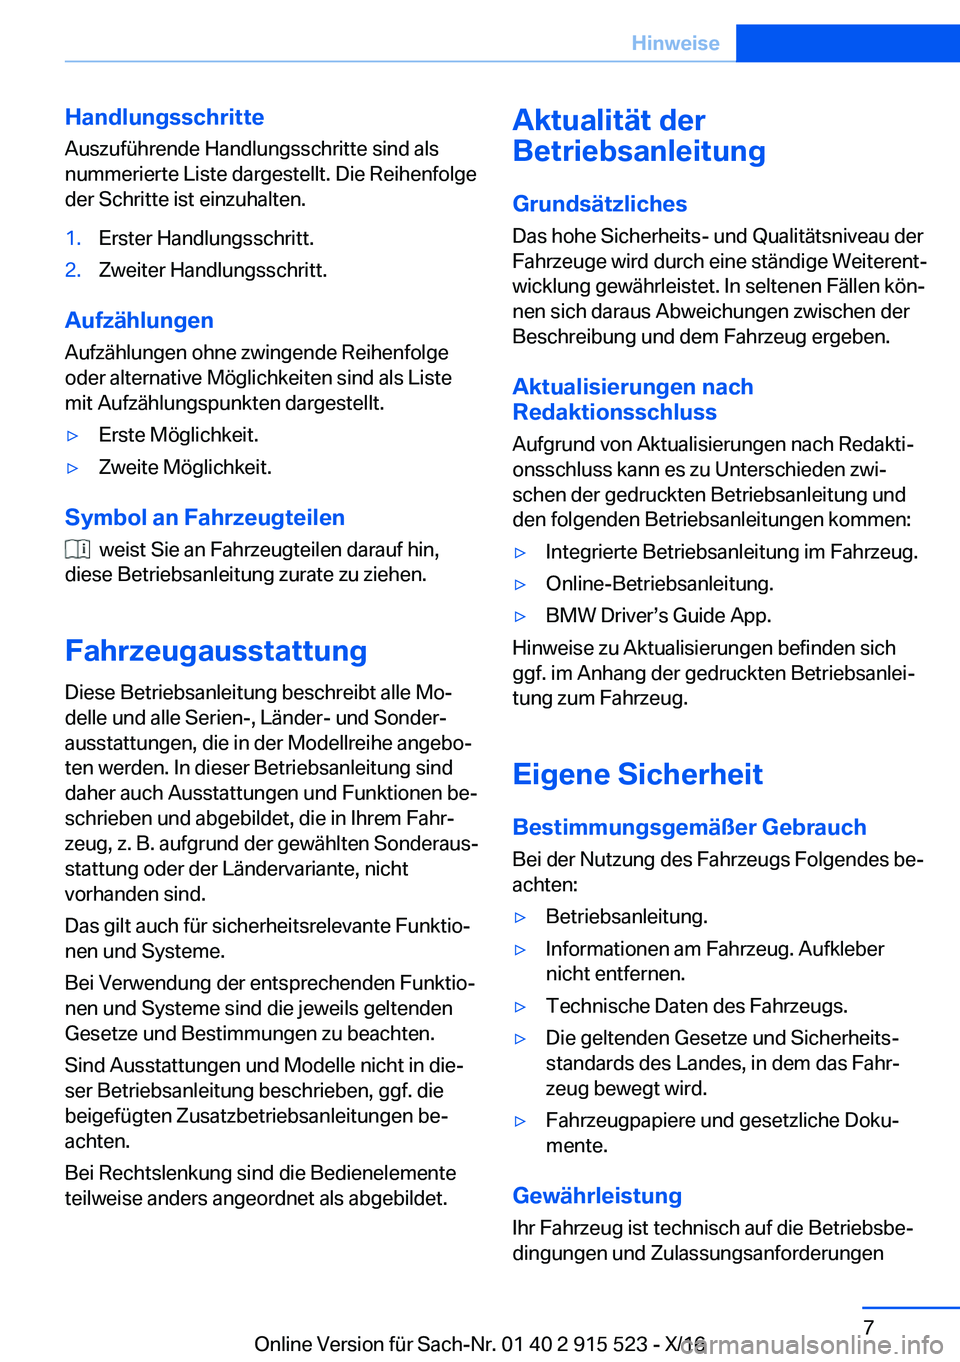 BMW X5 2017  Betriebsanleitungen (in German) �H�a�n�d�l�u�n�g�s�s�c�h�r�i�t�t�e�A�u�s�z�u�f�ü�h�r�e�n�d�e� �H�a�n�d�l�u�n�g�s�s�c�h�r�i�t�t�e� �s�i�n�d� �a�l�s�n�u�m�m�e�r�i�e�r�t�e� �L�i�s�t�e� �d�a�r�g�e�s�t�e�l�l�t�.� �D�i�e� �R�e�i�h�e�n�f�